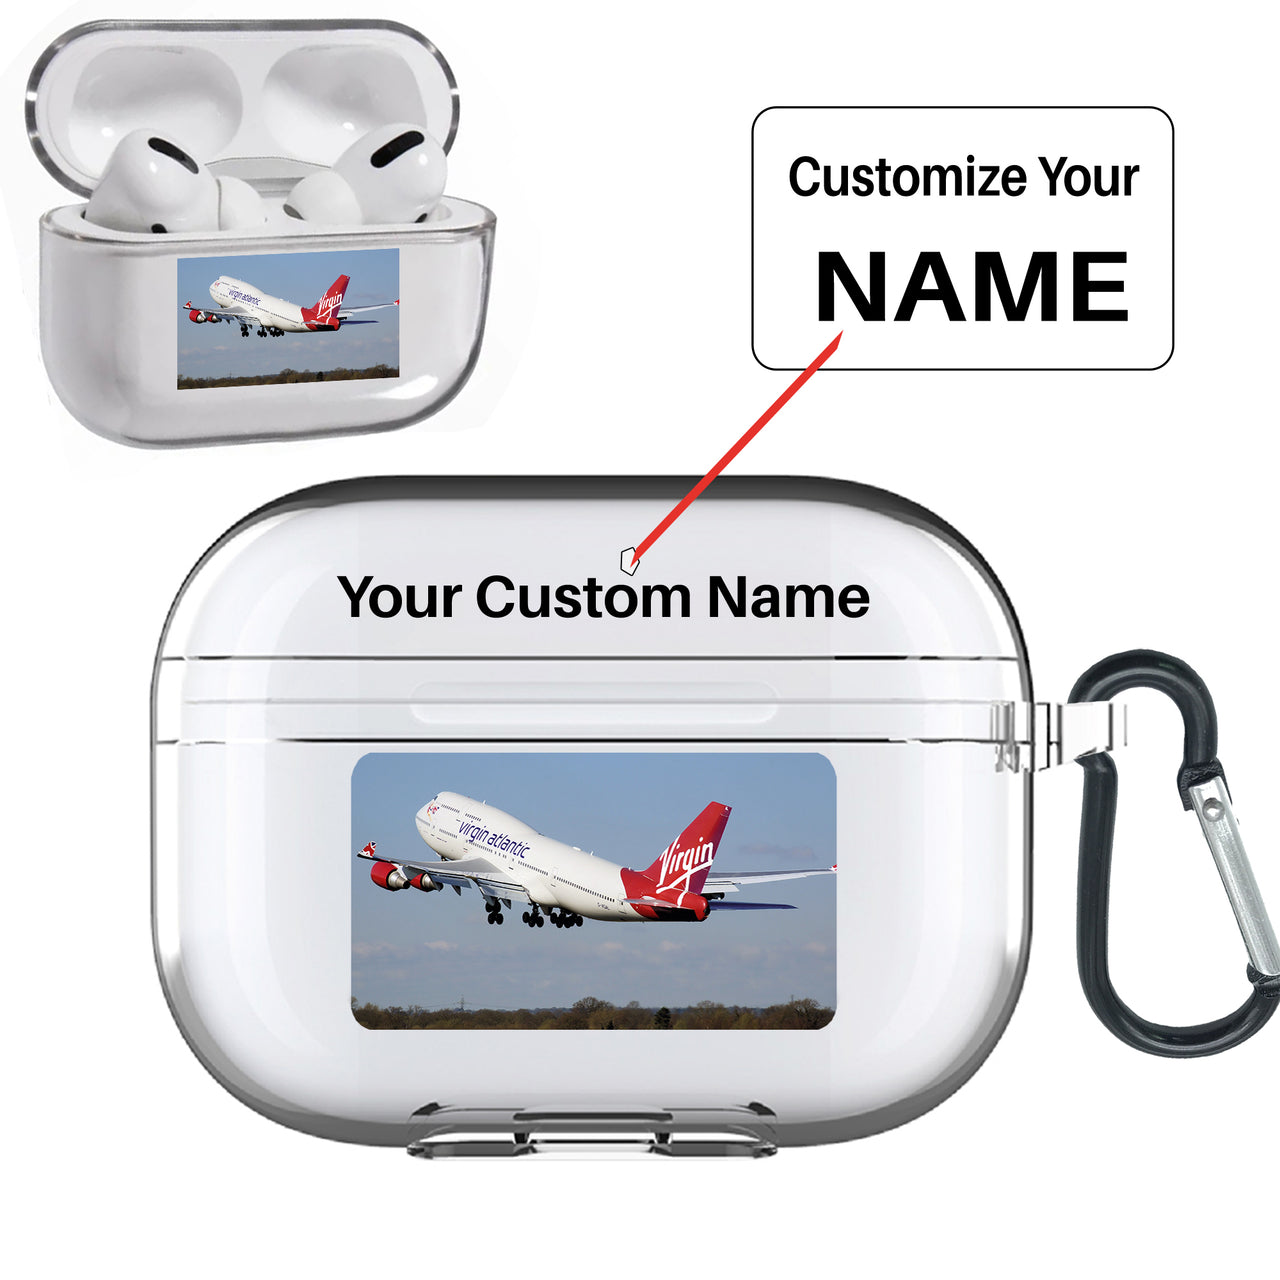 Virgin Atlantic Boeing 747 Designed Transparent Earphone AirPods "Pro" Cases